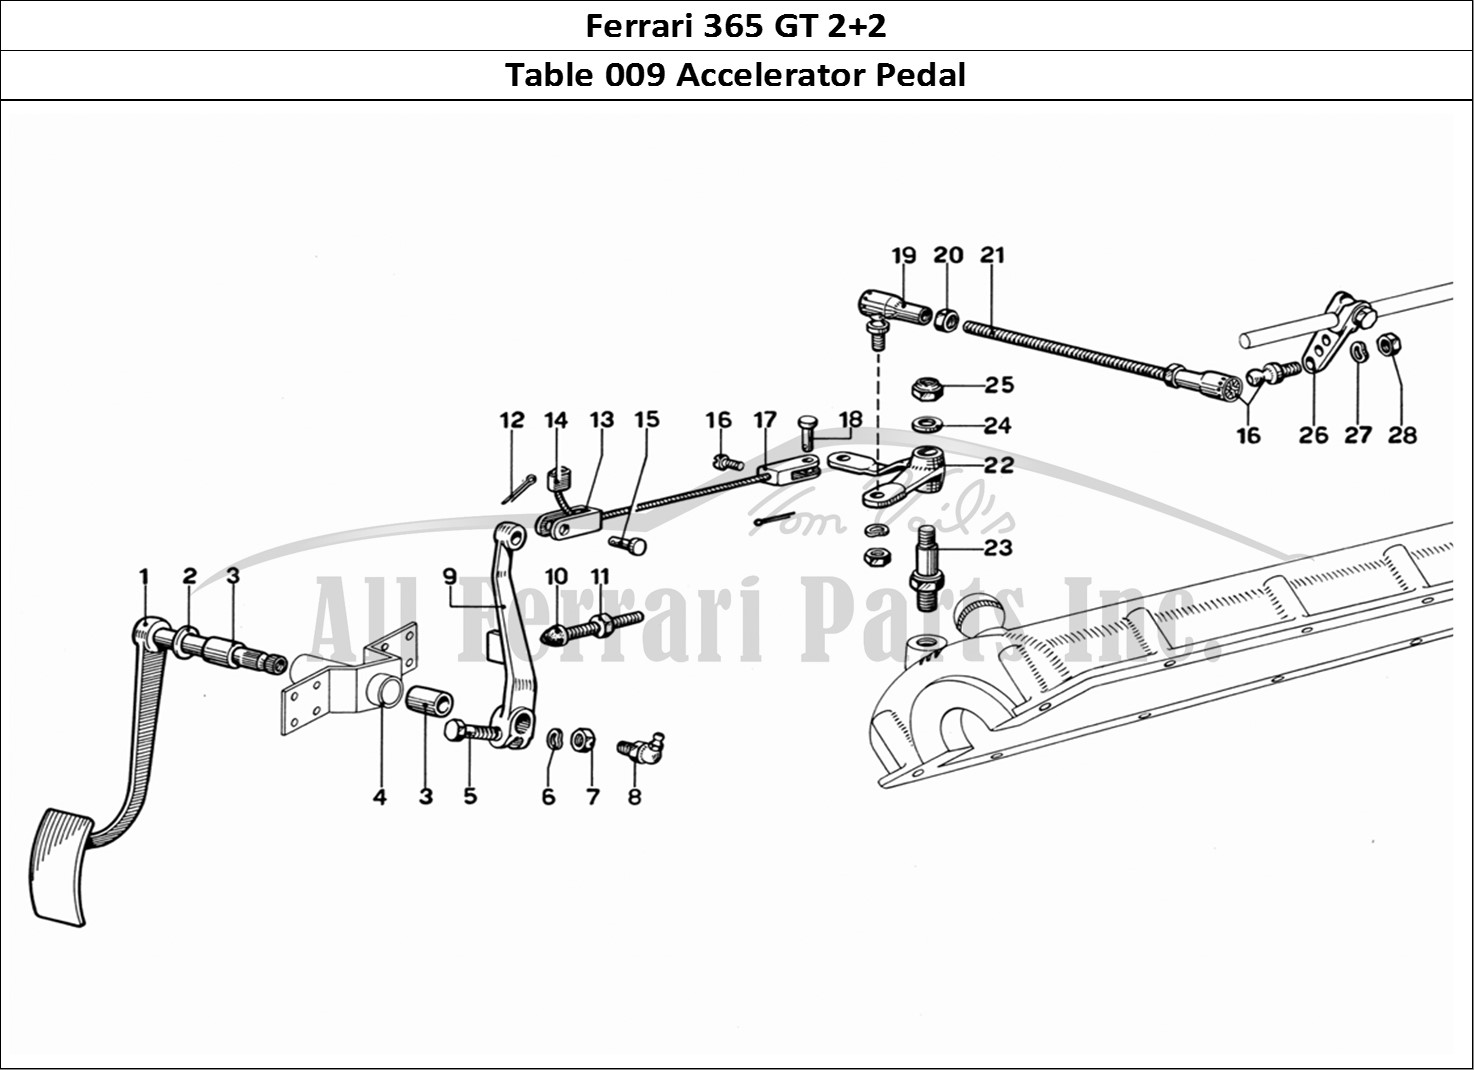 Ferrari Parts Ferrari 365 GT 2+2 (Mechanical) Page 009 Throttle Pedal